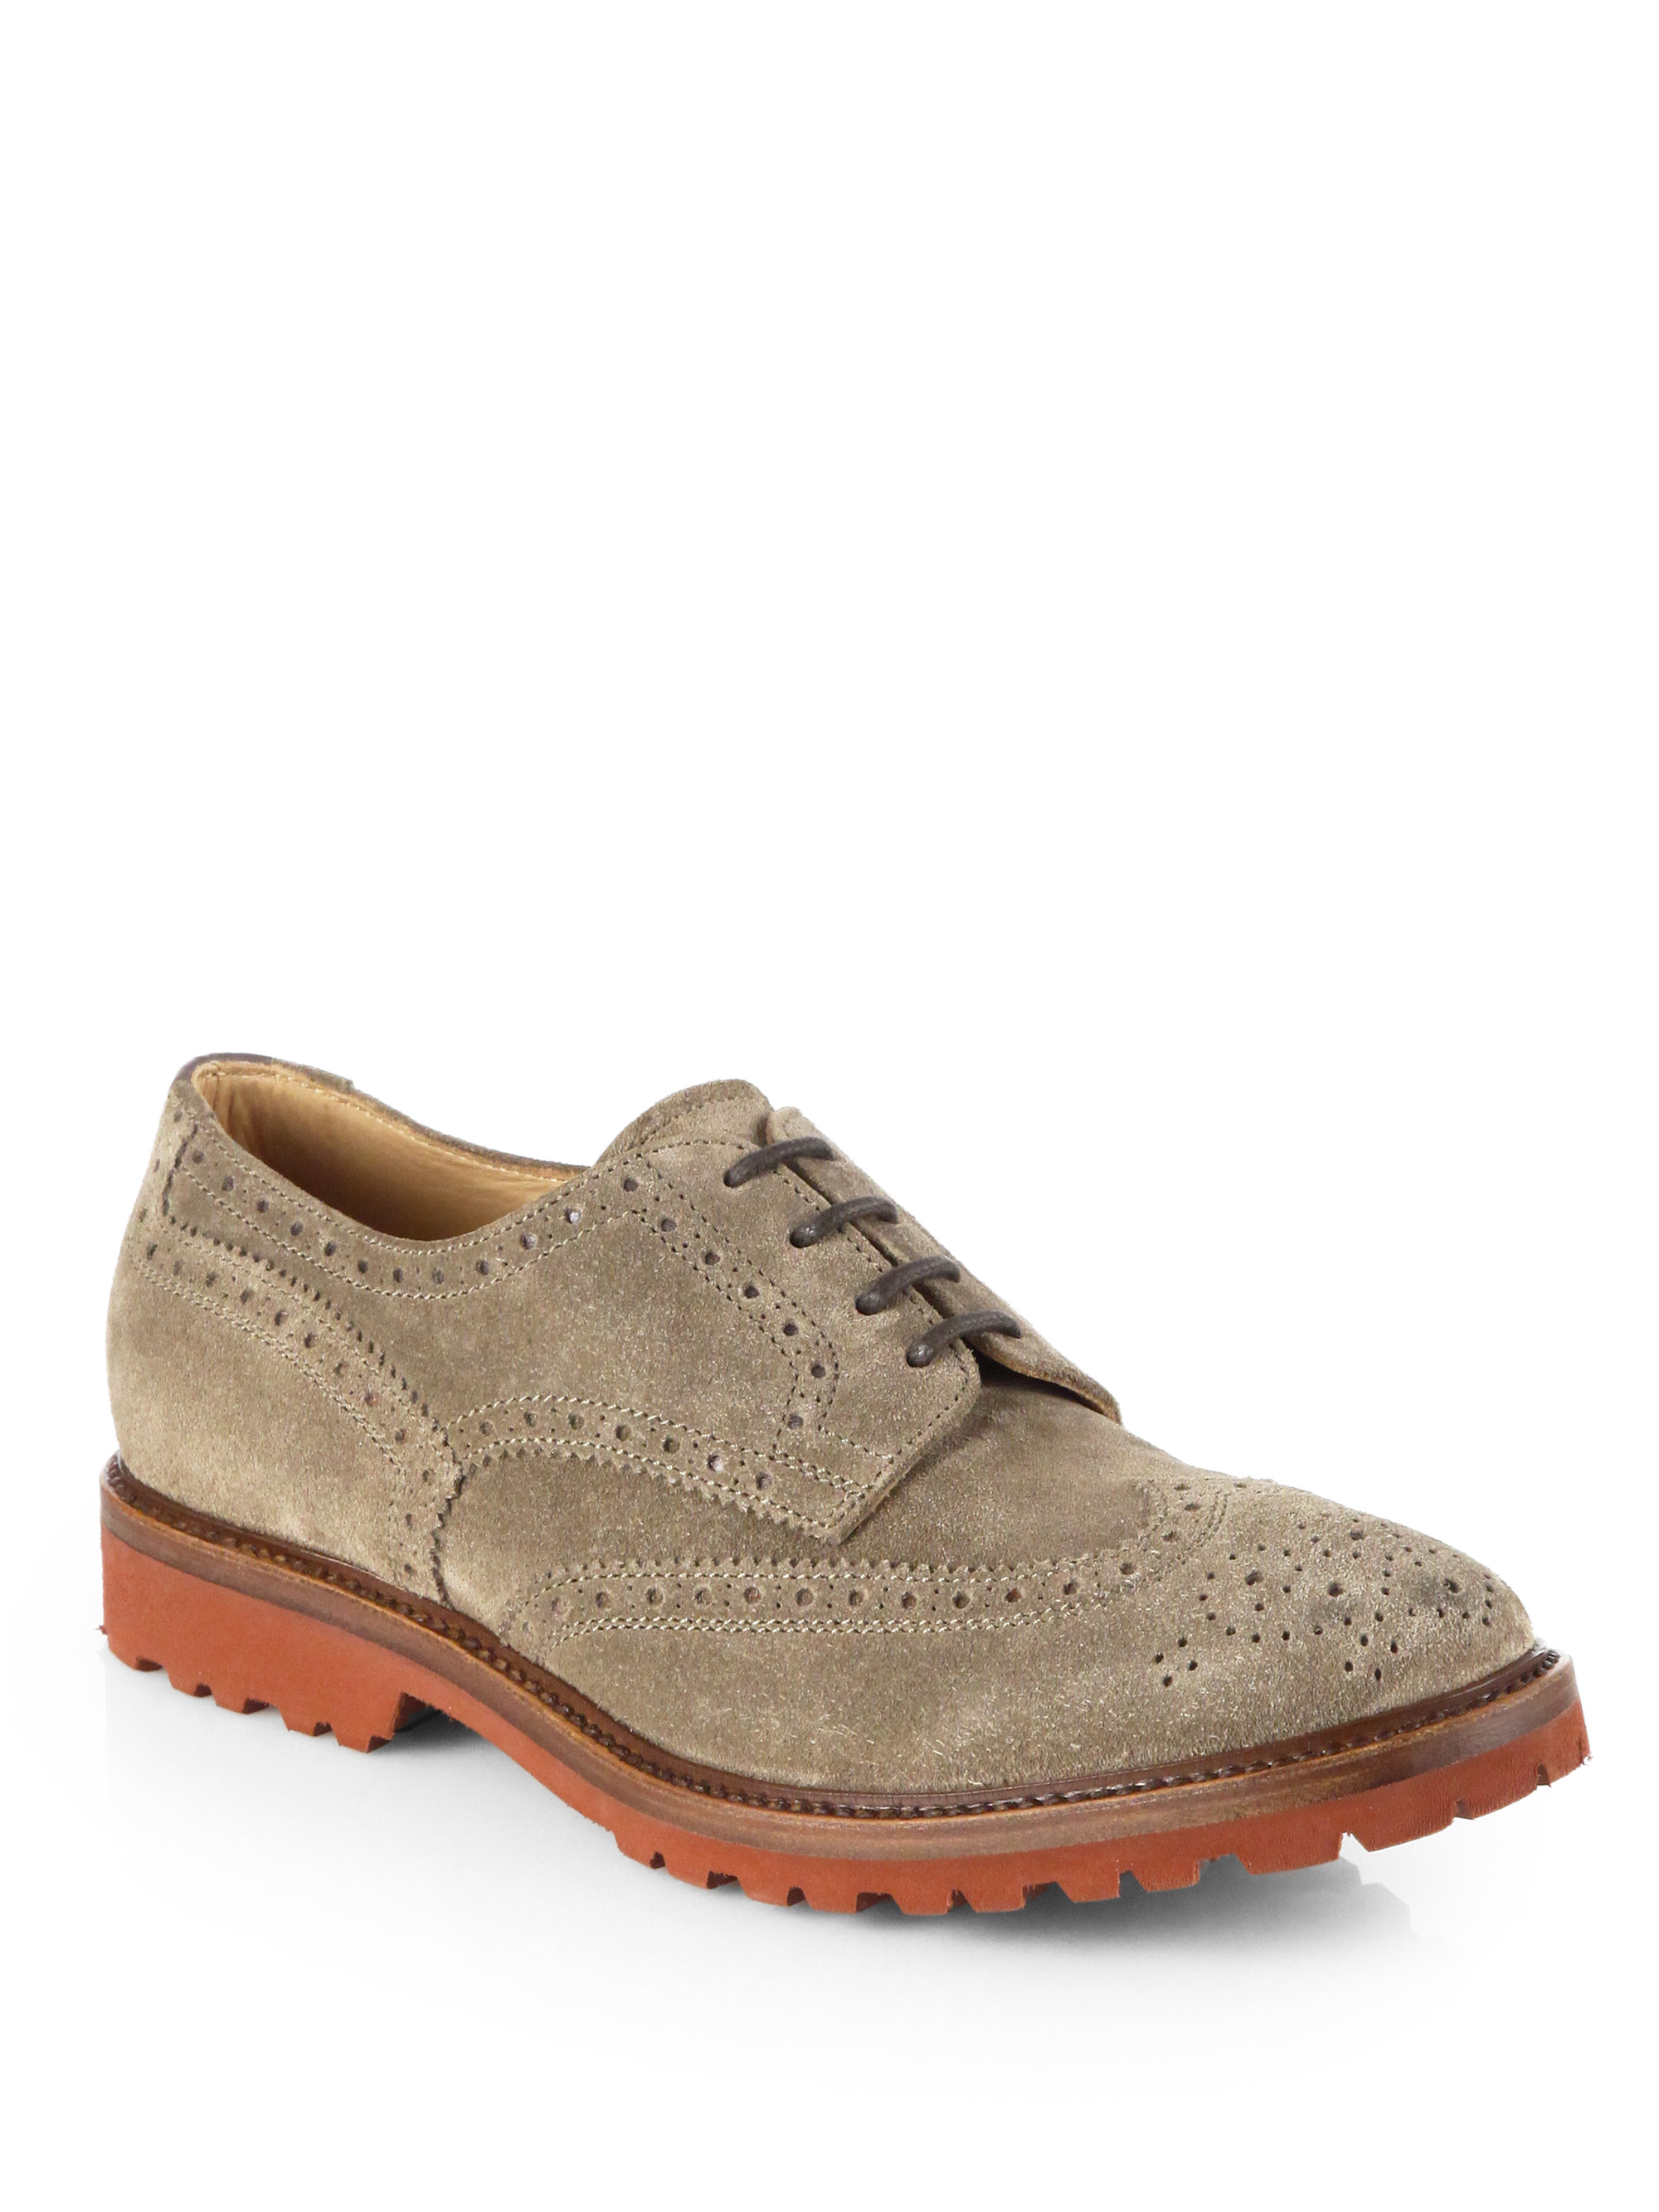 Brunello Cucinelli Suede Wingtip Derby Shoes In Brown For Men Lyst 3467